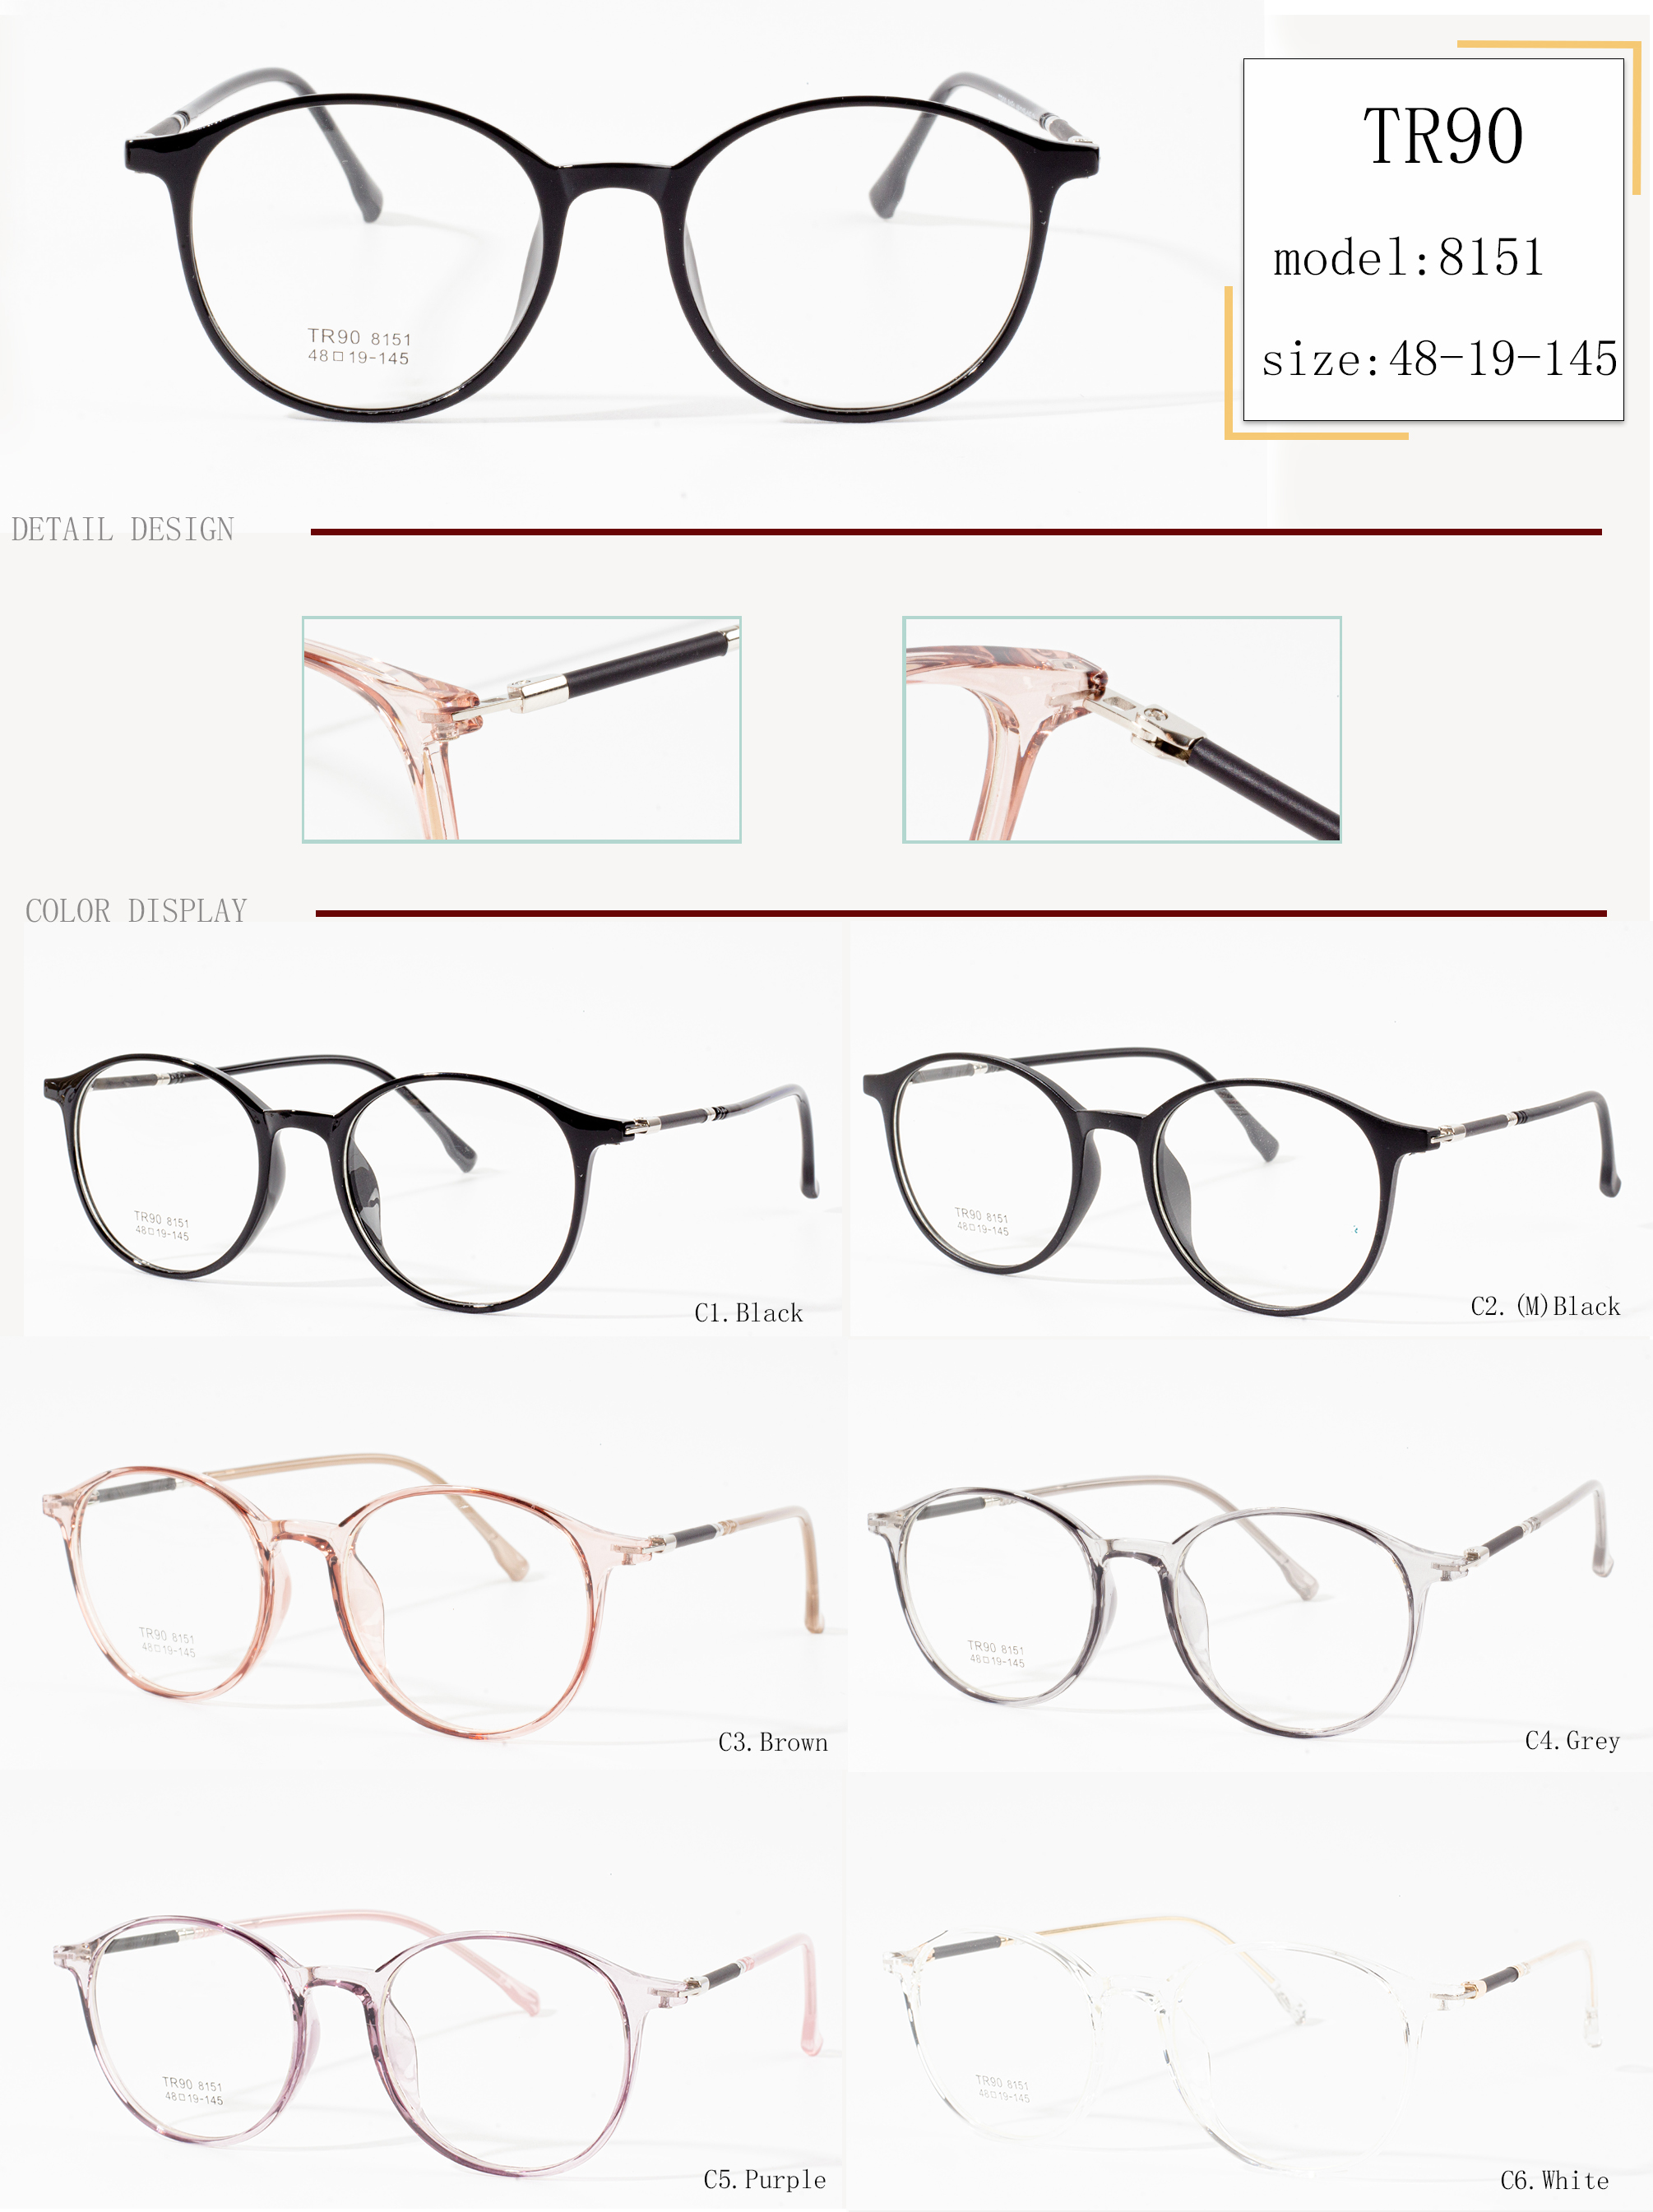 kampioen brille frames